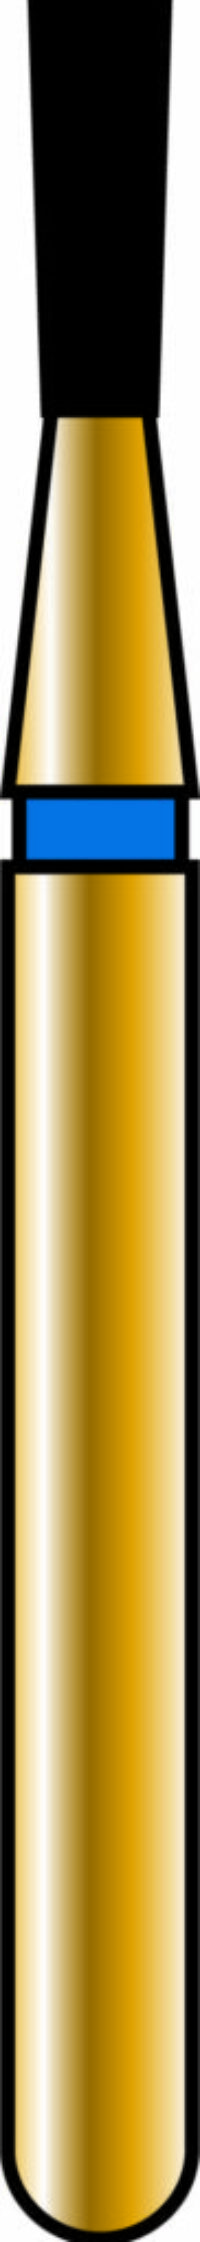 Inverted Cone 12-3.5mm Gold Diamond Bur - Coarse Grit